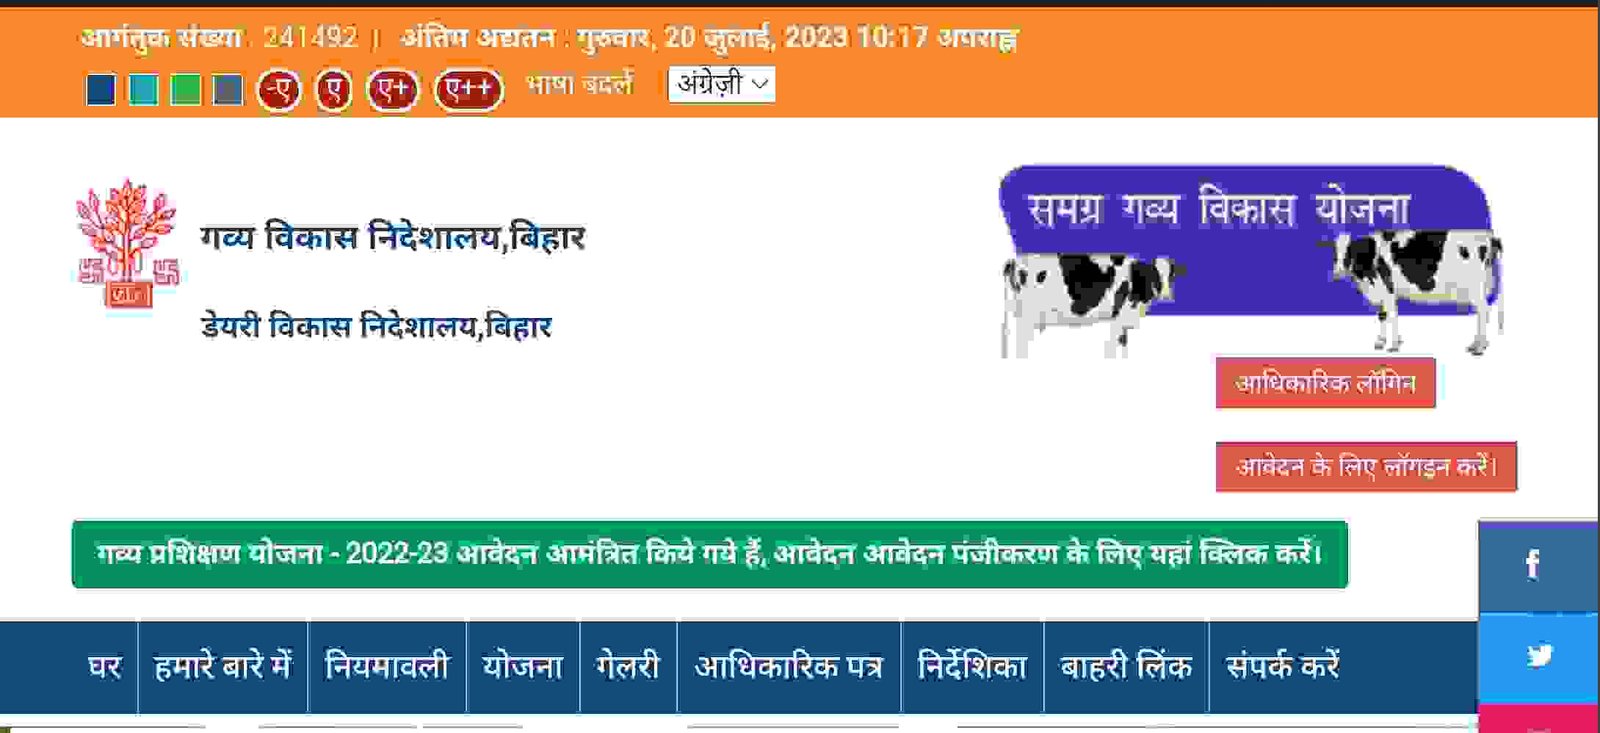 Bihar Deshi Gaupalan Protsahan Yojana 2023